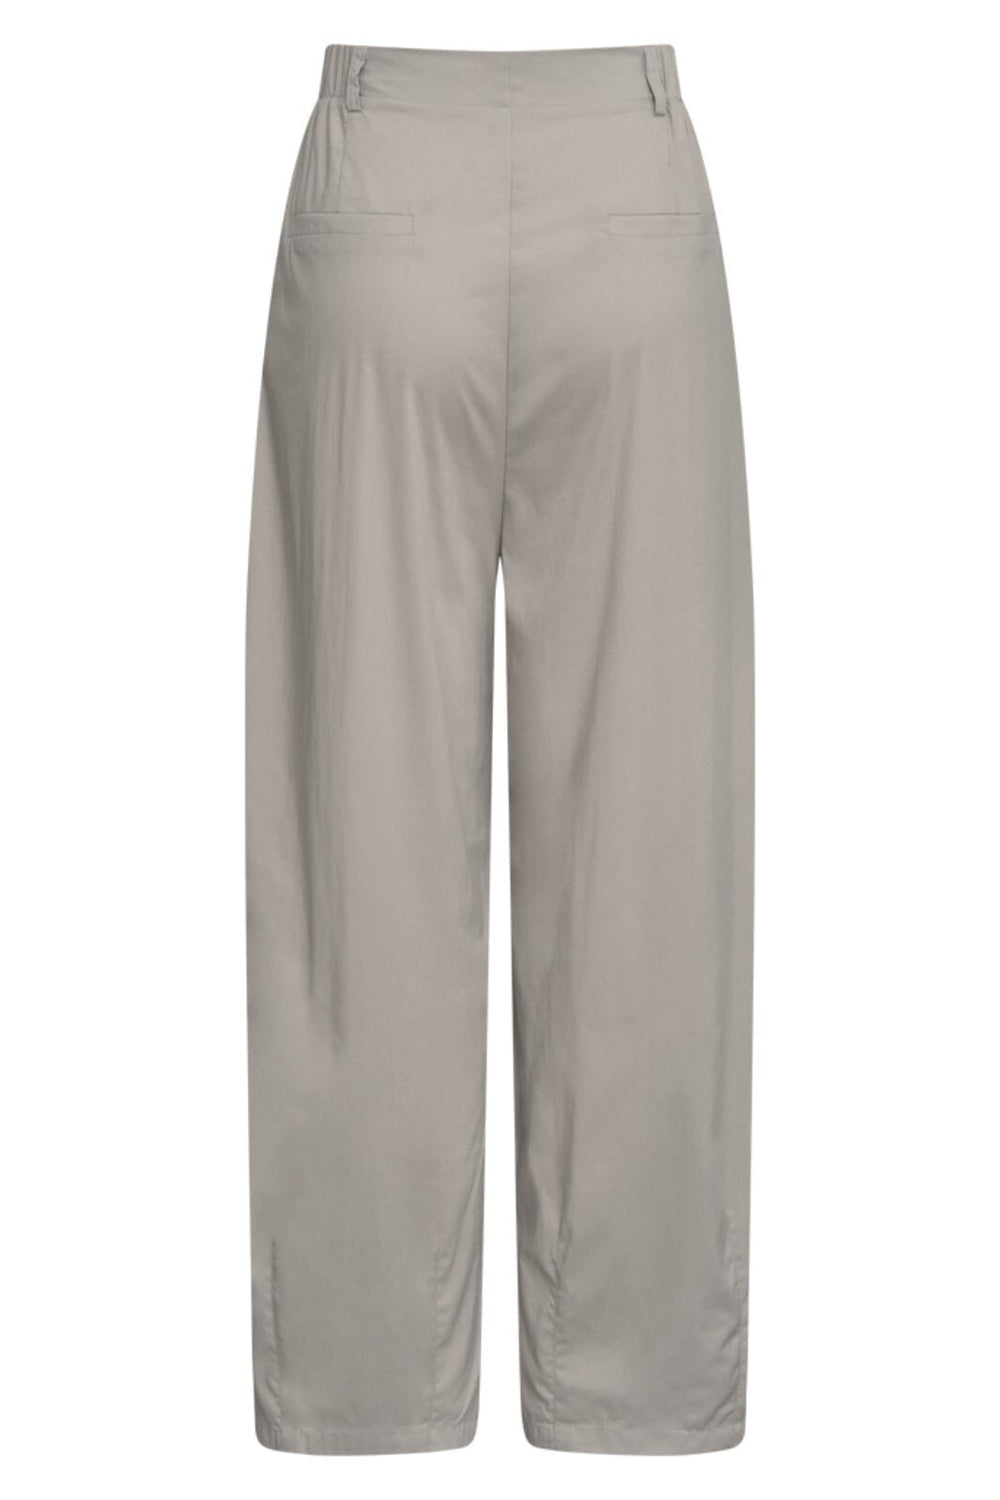 Gossia - Assikago Pants - Light Grey Bukser 